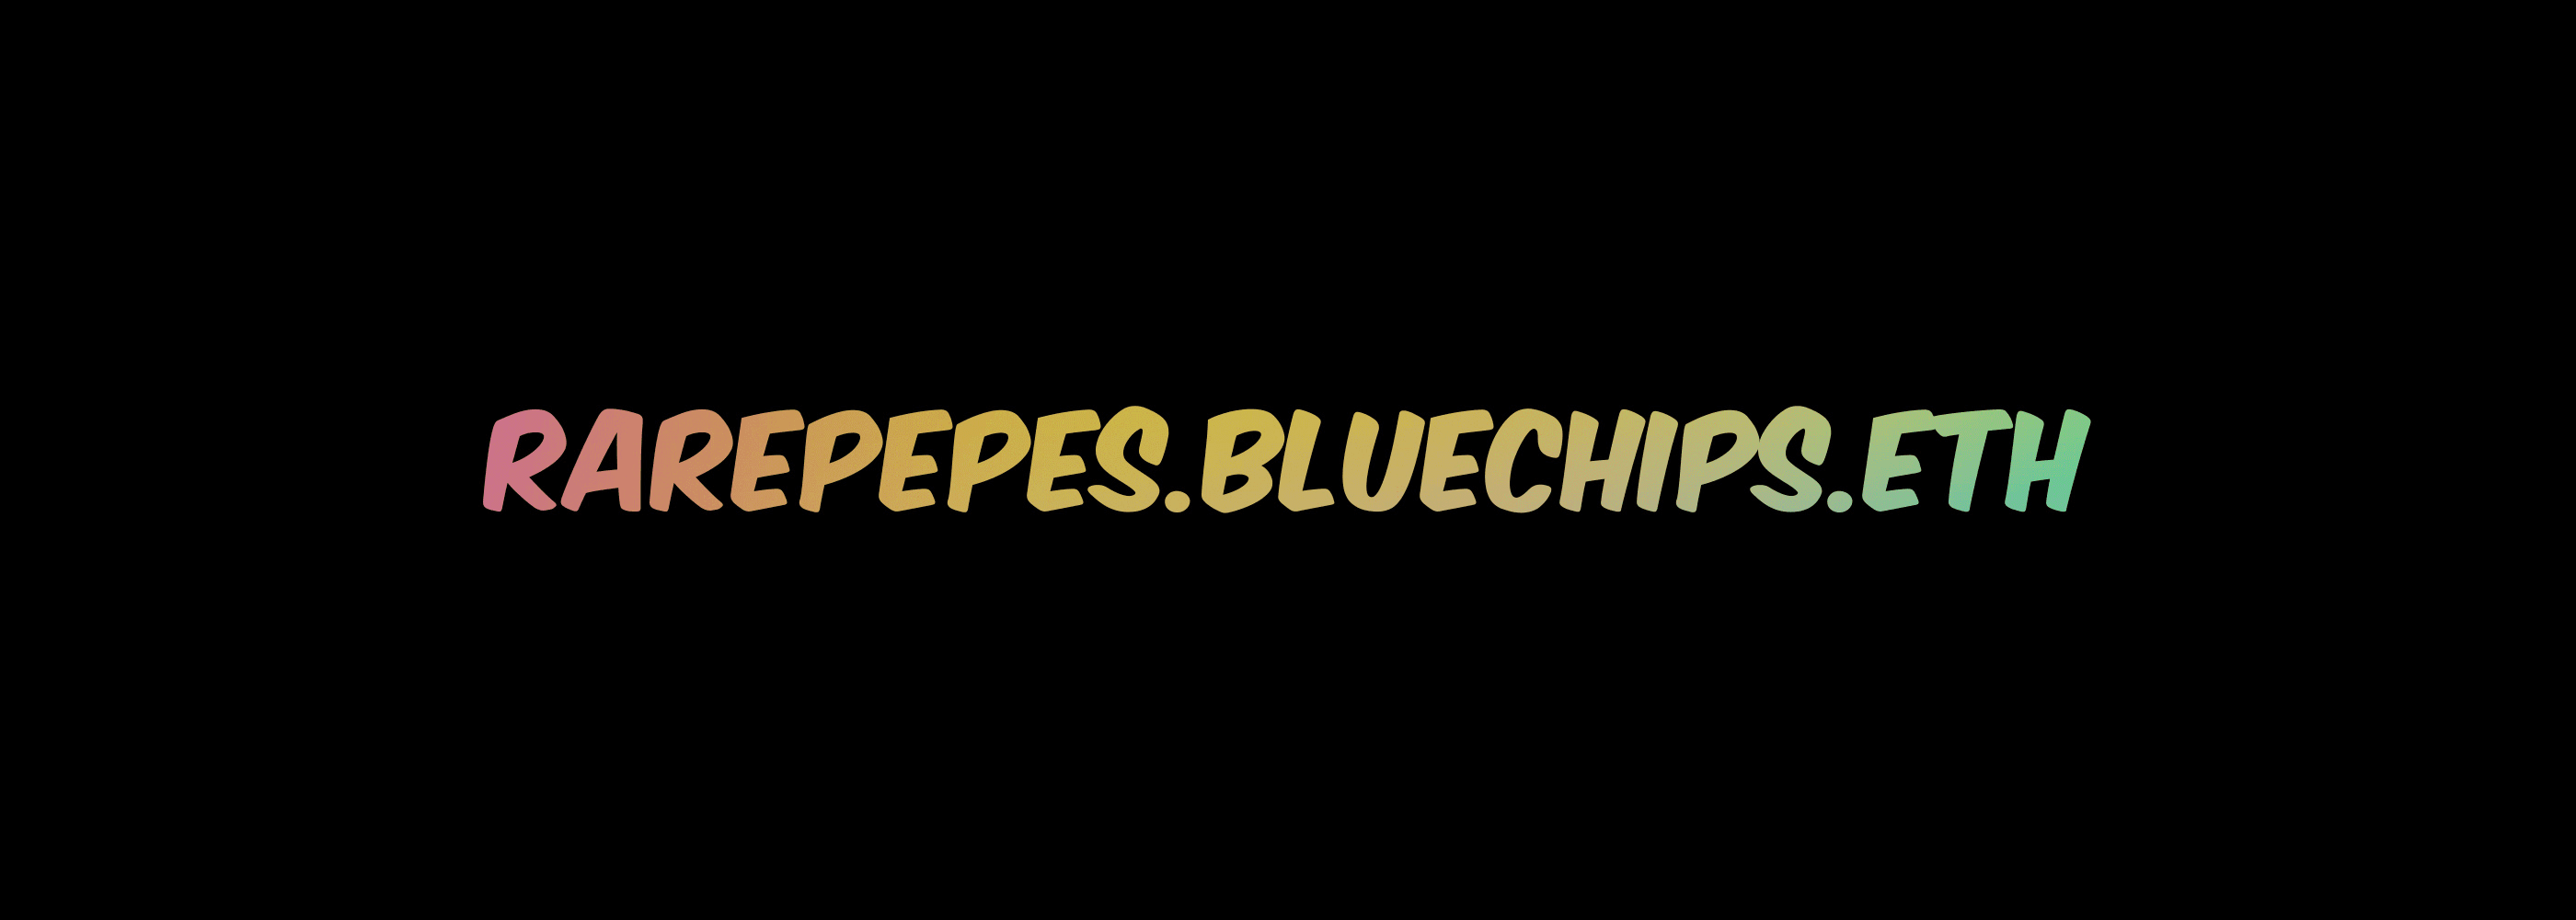 rarepepes.bluechips.eth バナー